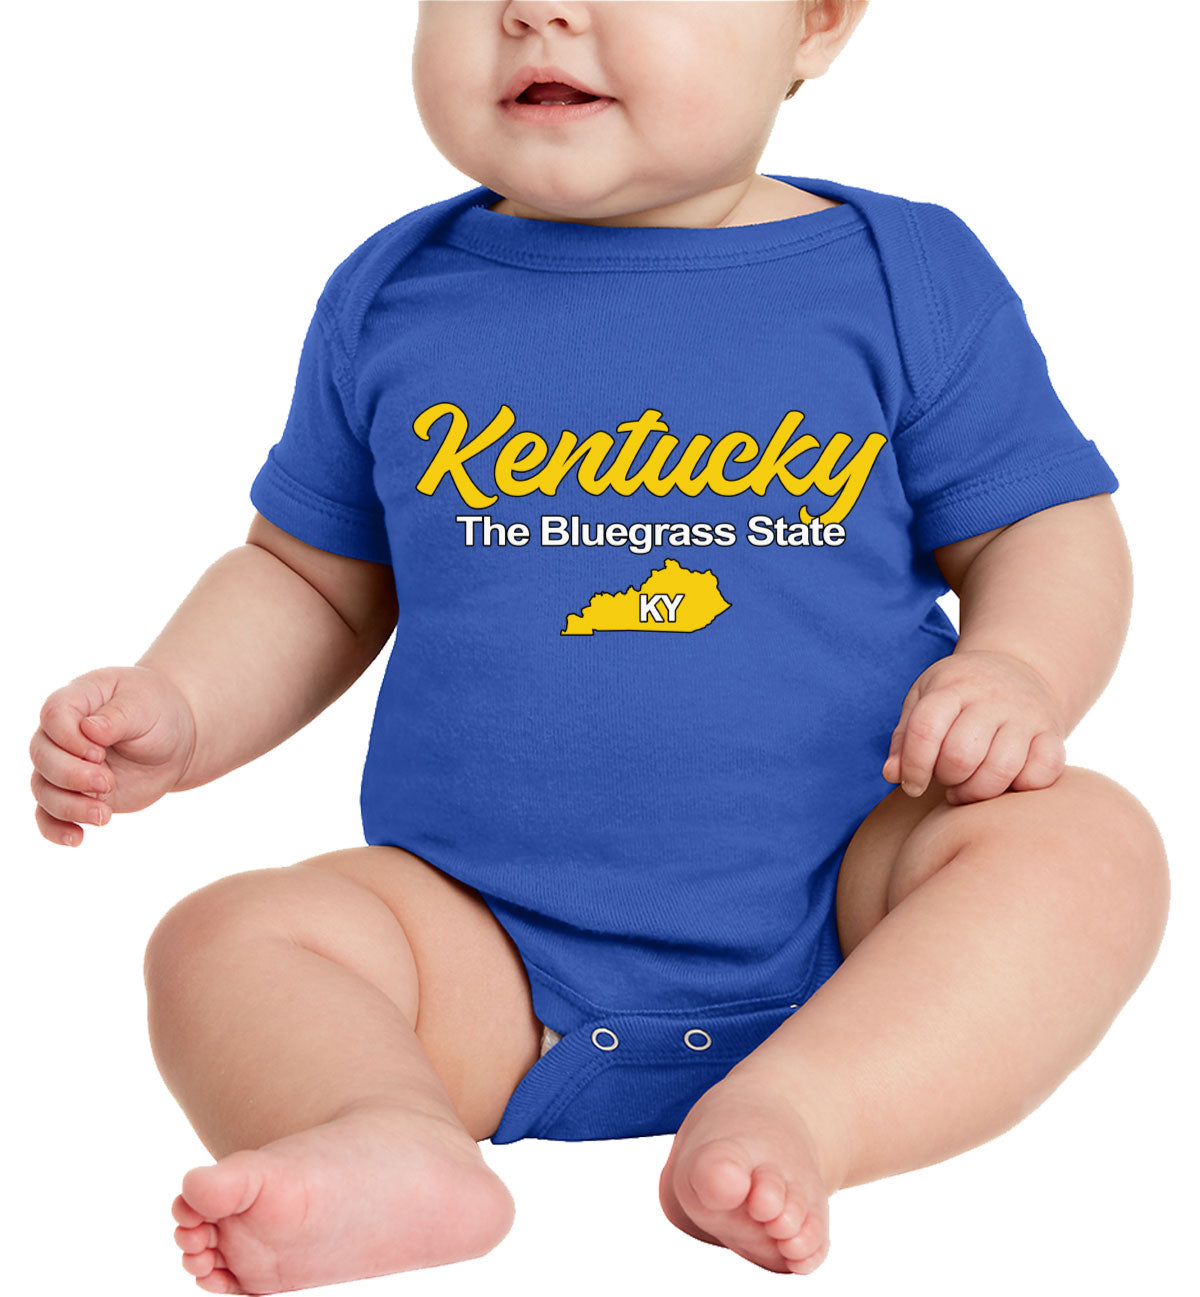 Kentucky The Bluegrass State Baby Onesie